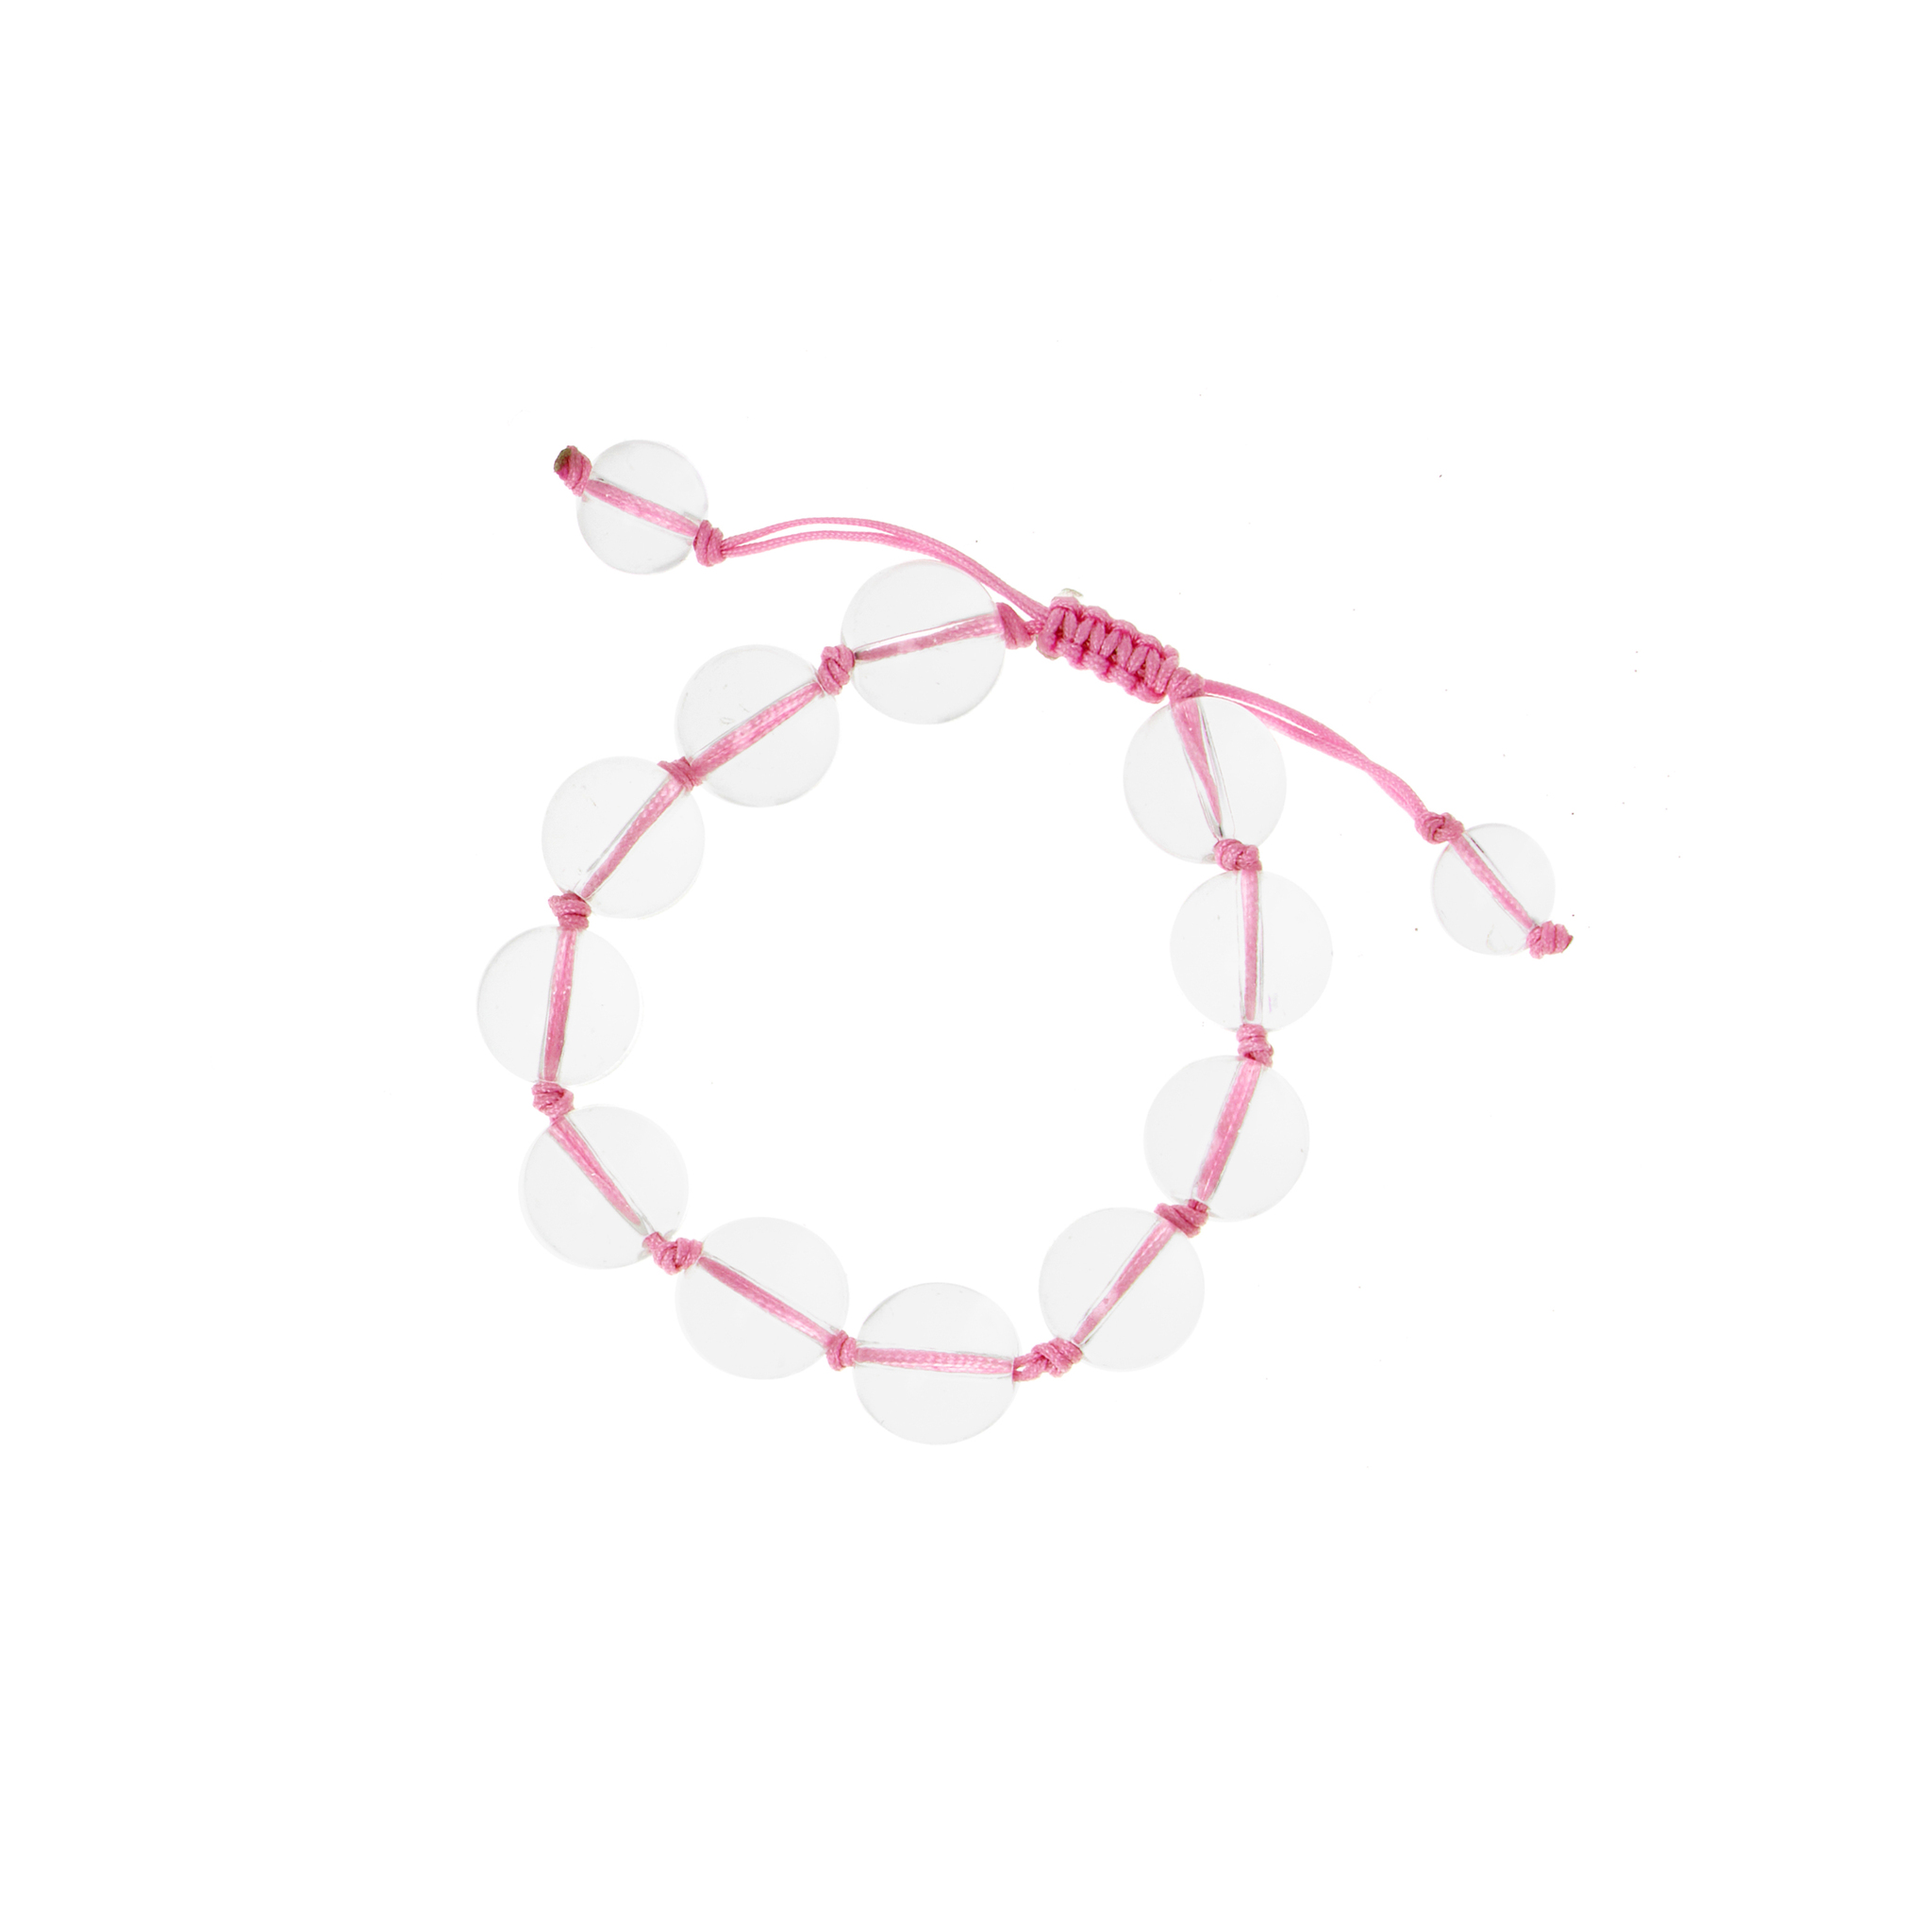 HOLLY JUNE Браслет Crystal Clear Bracelet – Pink holly june браслет cloudy sky bracelet